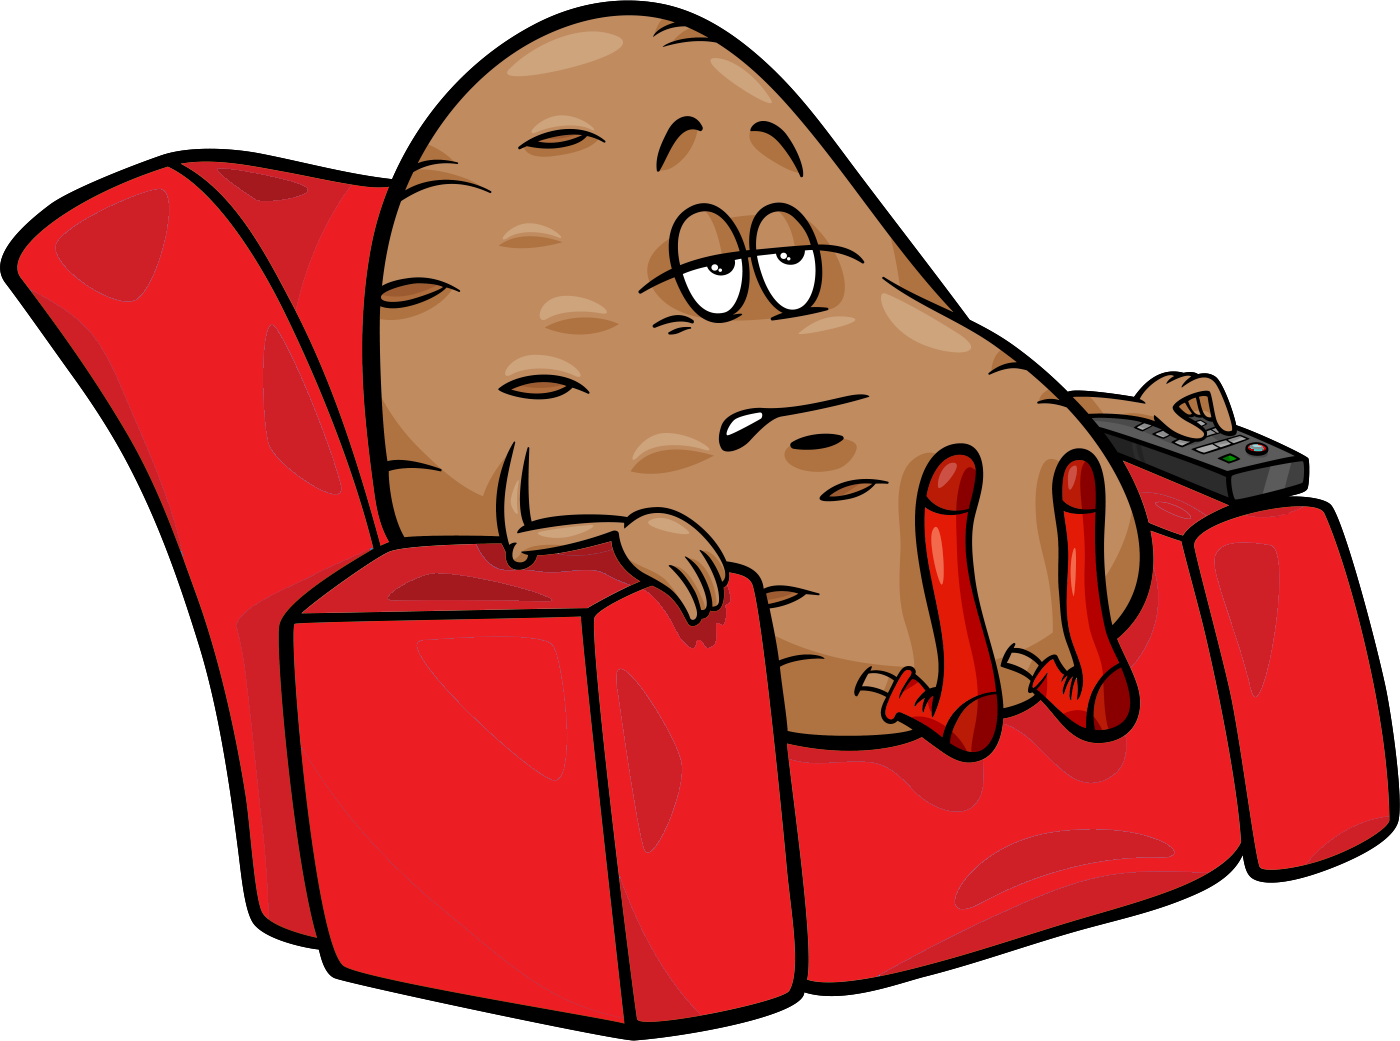 Couch Potato.